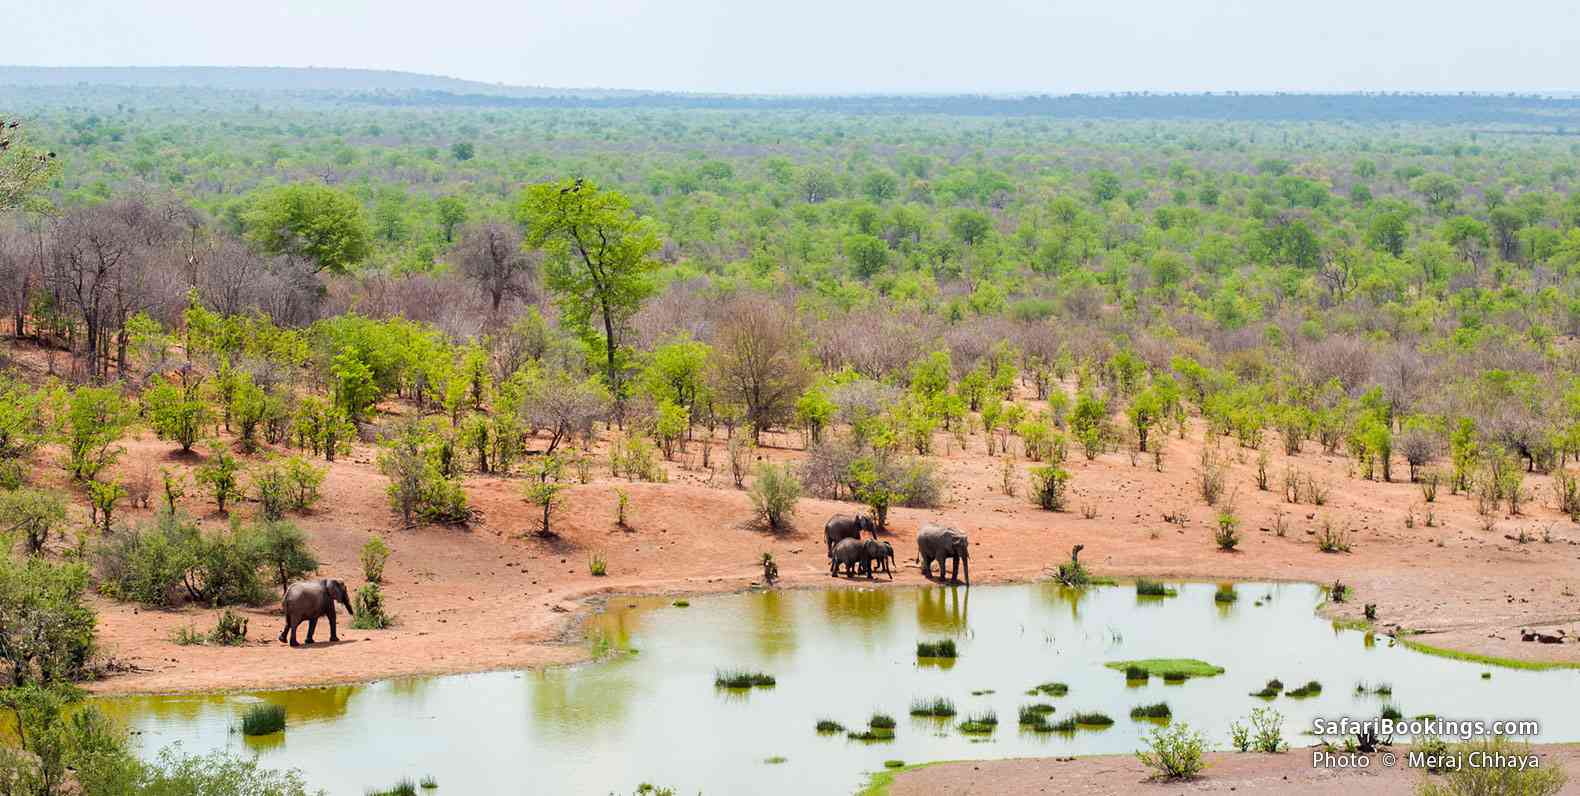 Elephants at a waterhole, Zimbabwe